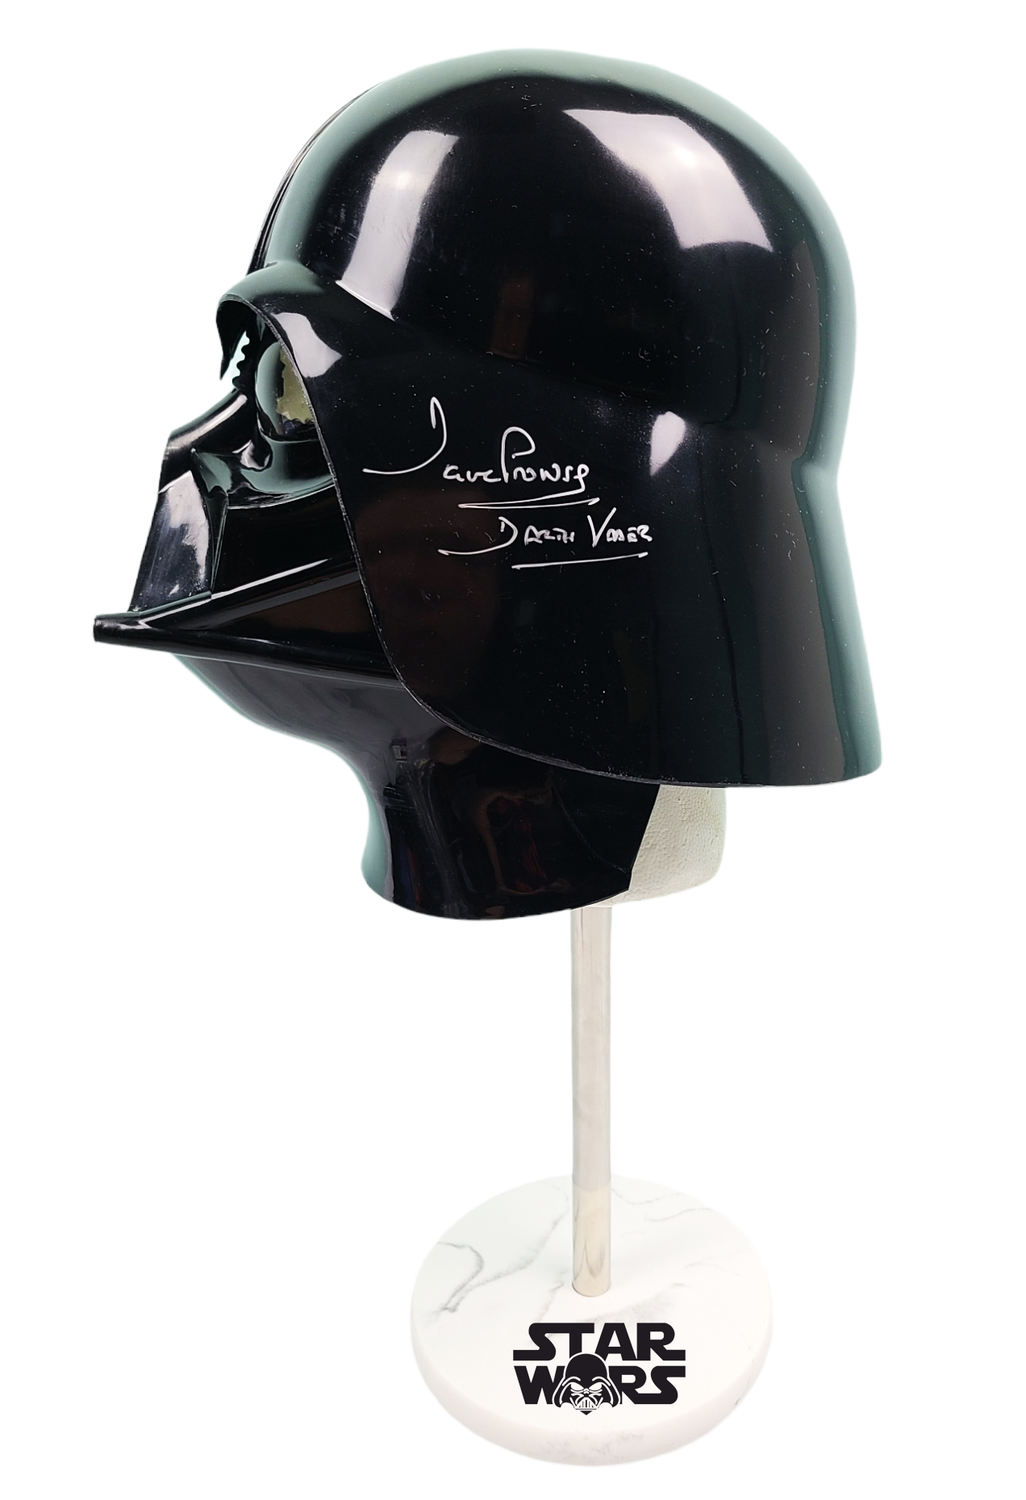 Dave Prowse Autographed Star Wars Darth Vader Full Scale 1:1 Helmet Display JSA